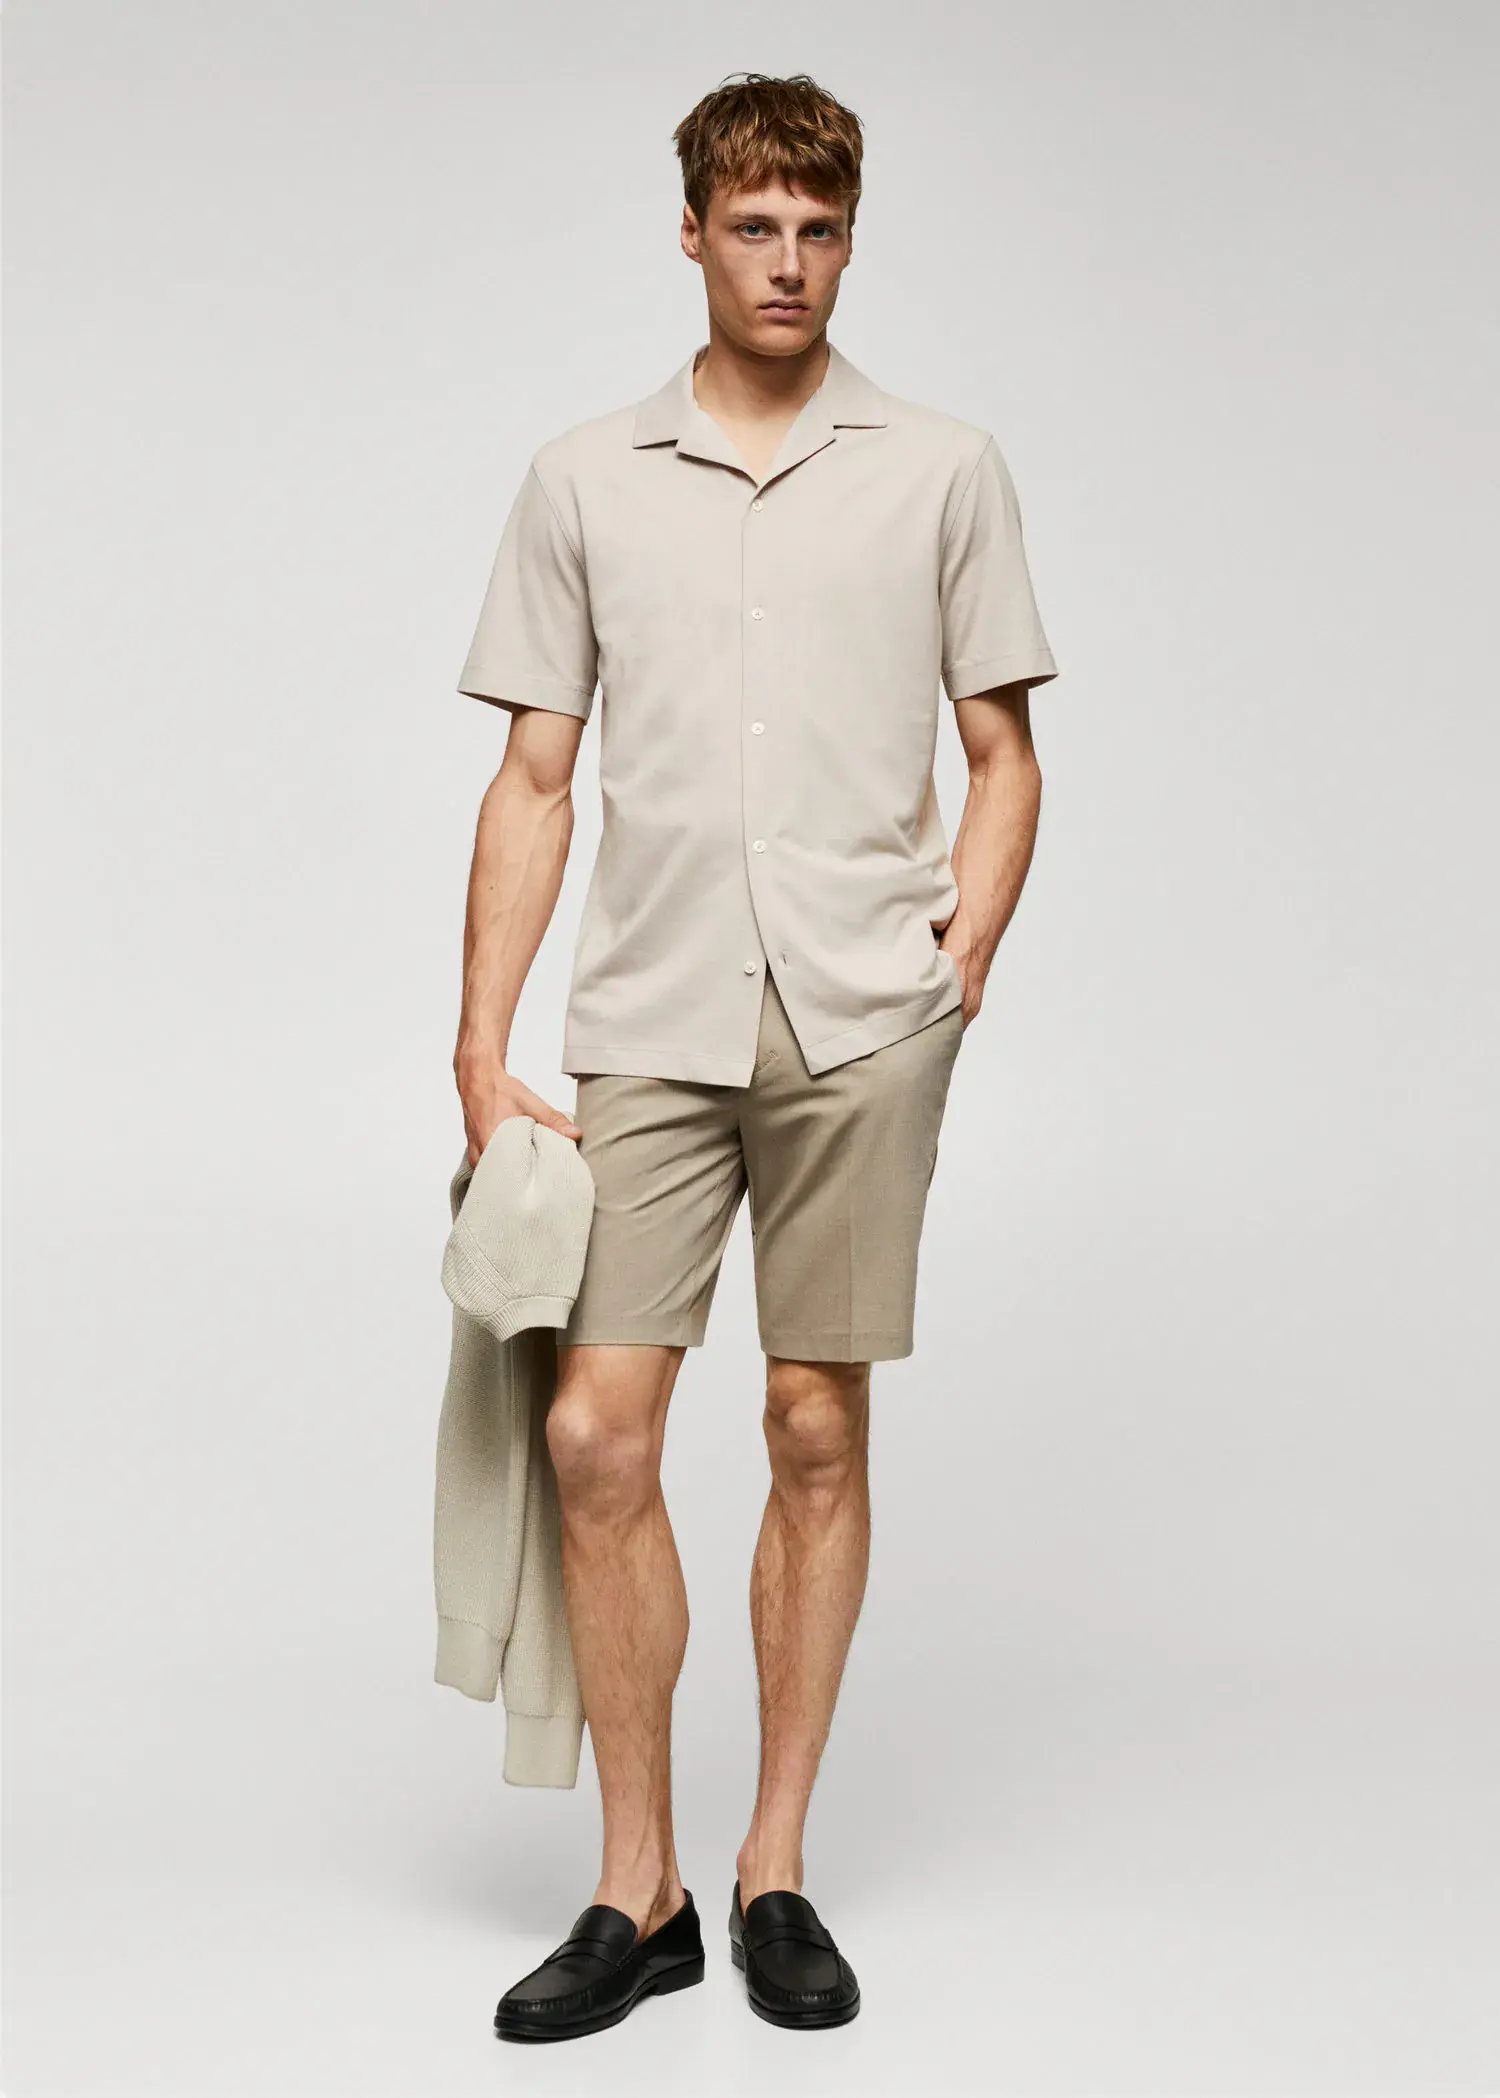 Mango Bowling-collar pique shirt. a man in a tan shirt and tan shorts. 